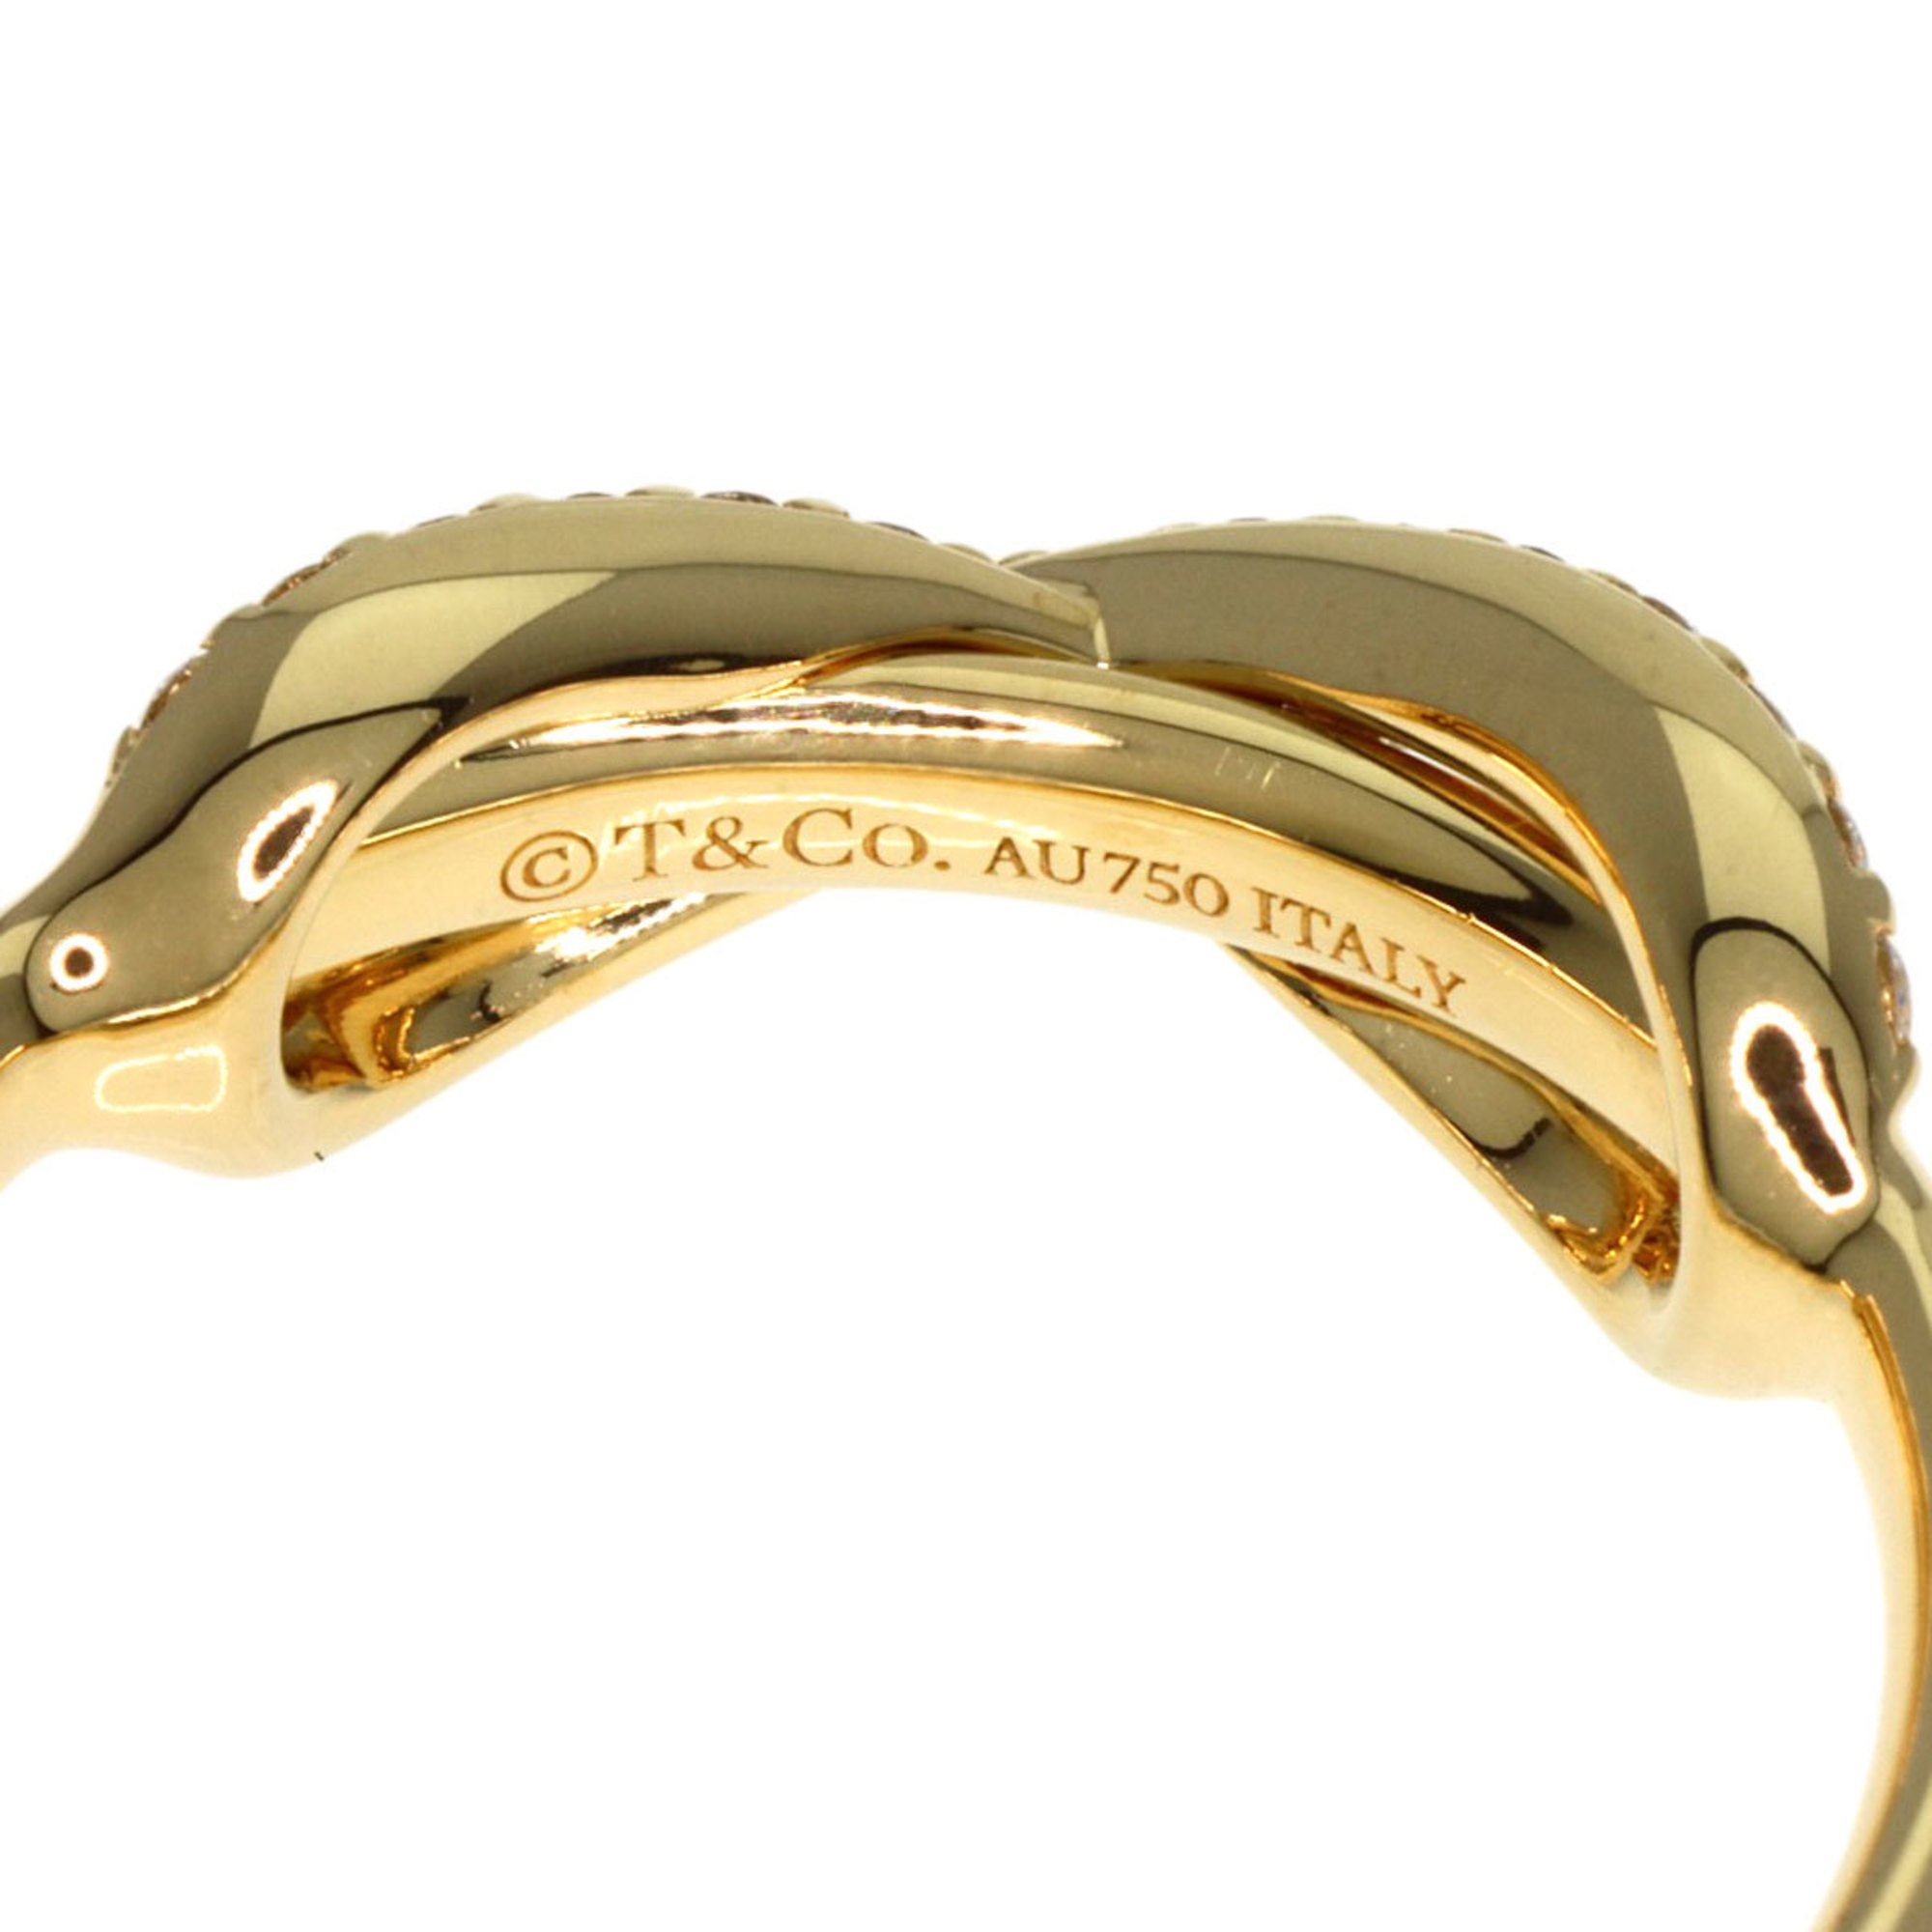 Tiffany Infinity Diamond Ring, 18K Yellow Gold, Women's